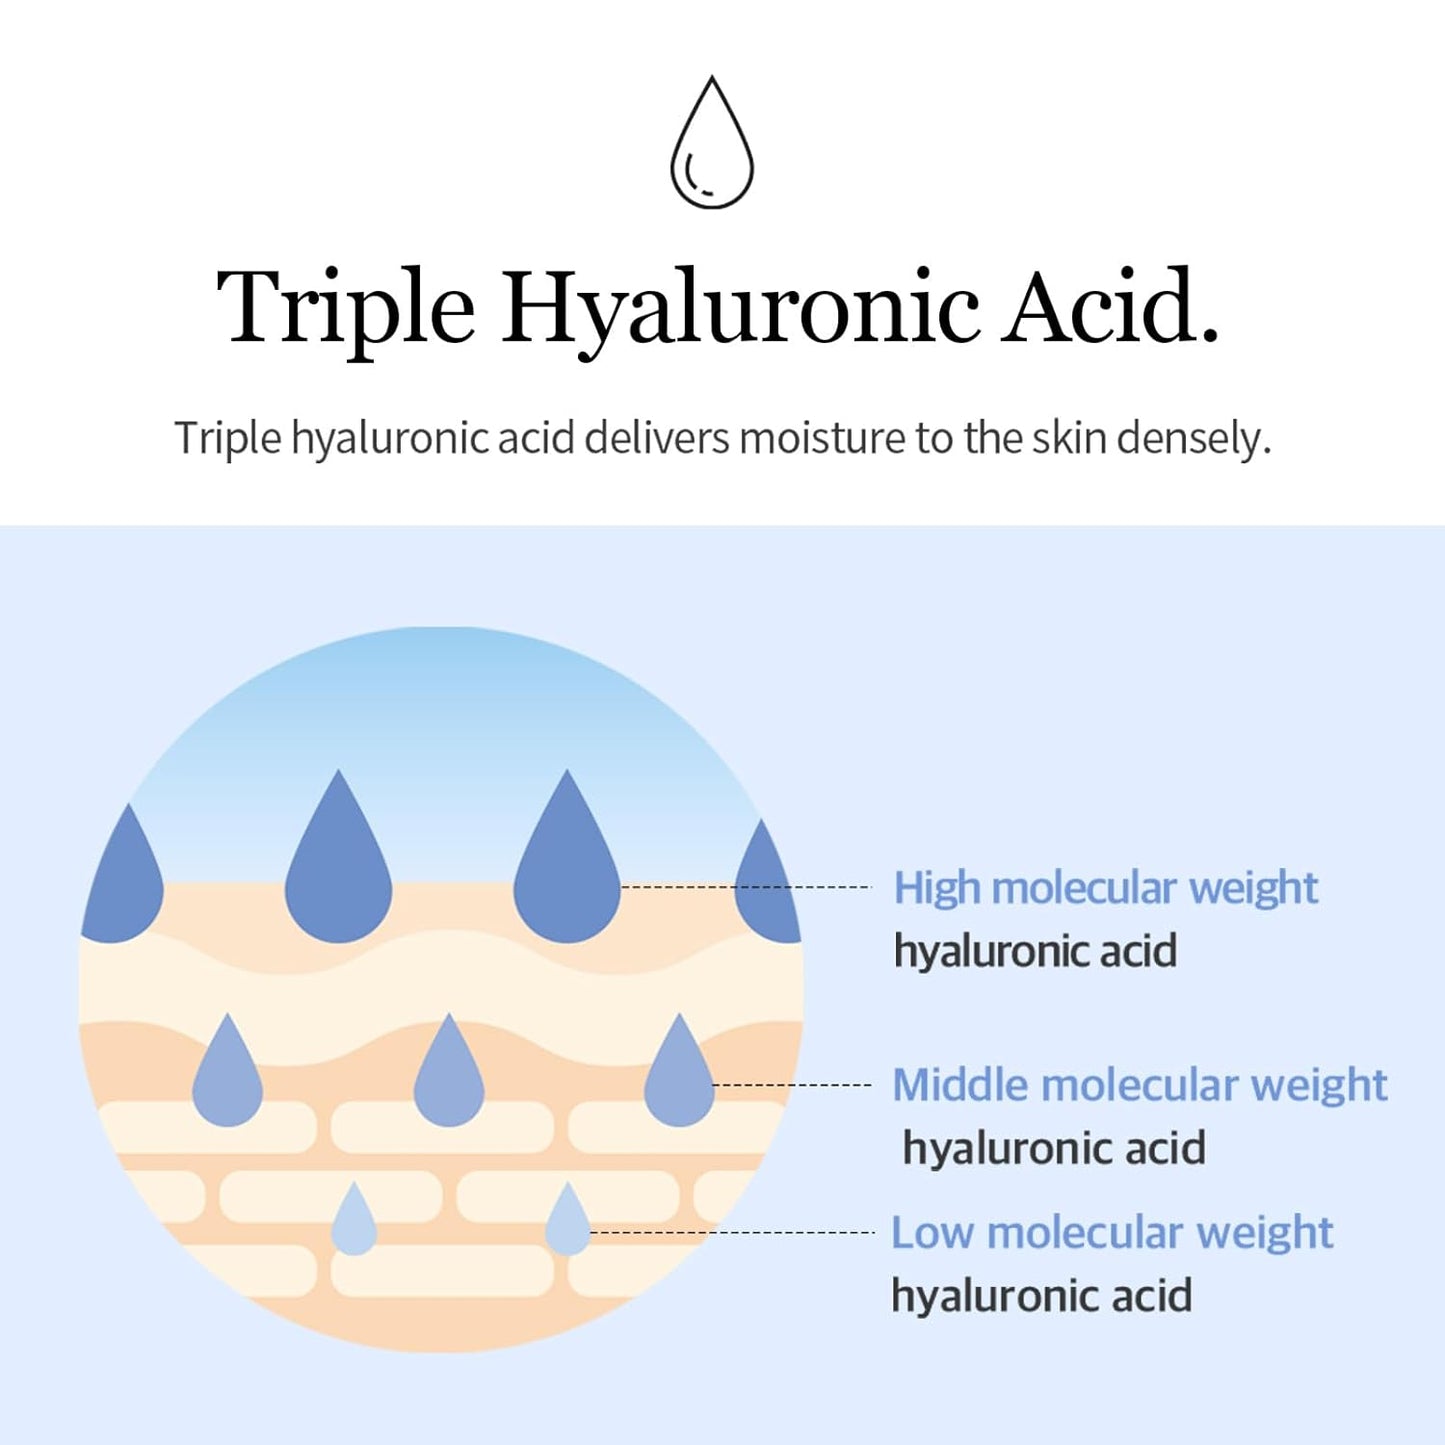 Mixsoon Glacier Water Hyaluronic Acid Serum